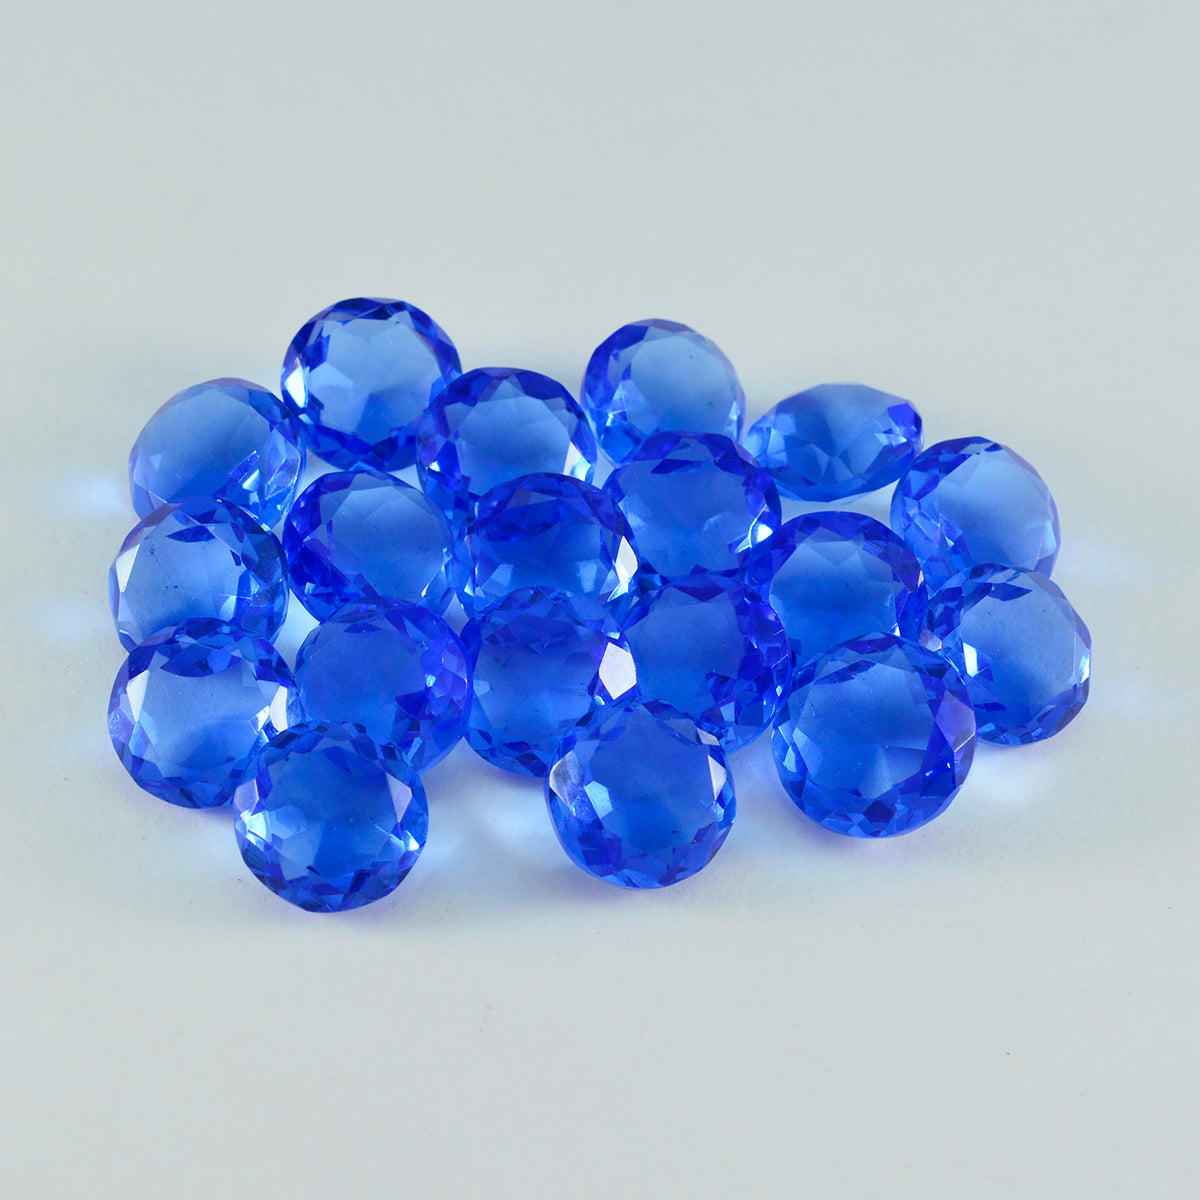 Riyogems 1PC Blue Sapphire CZ Faceted 7x7 mm Round Shape superb Quality Loose Gem